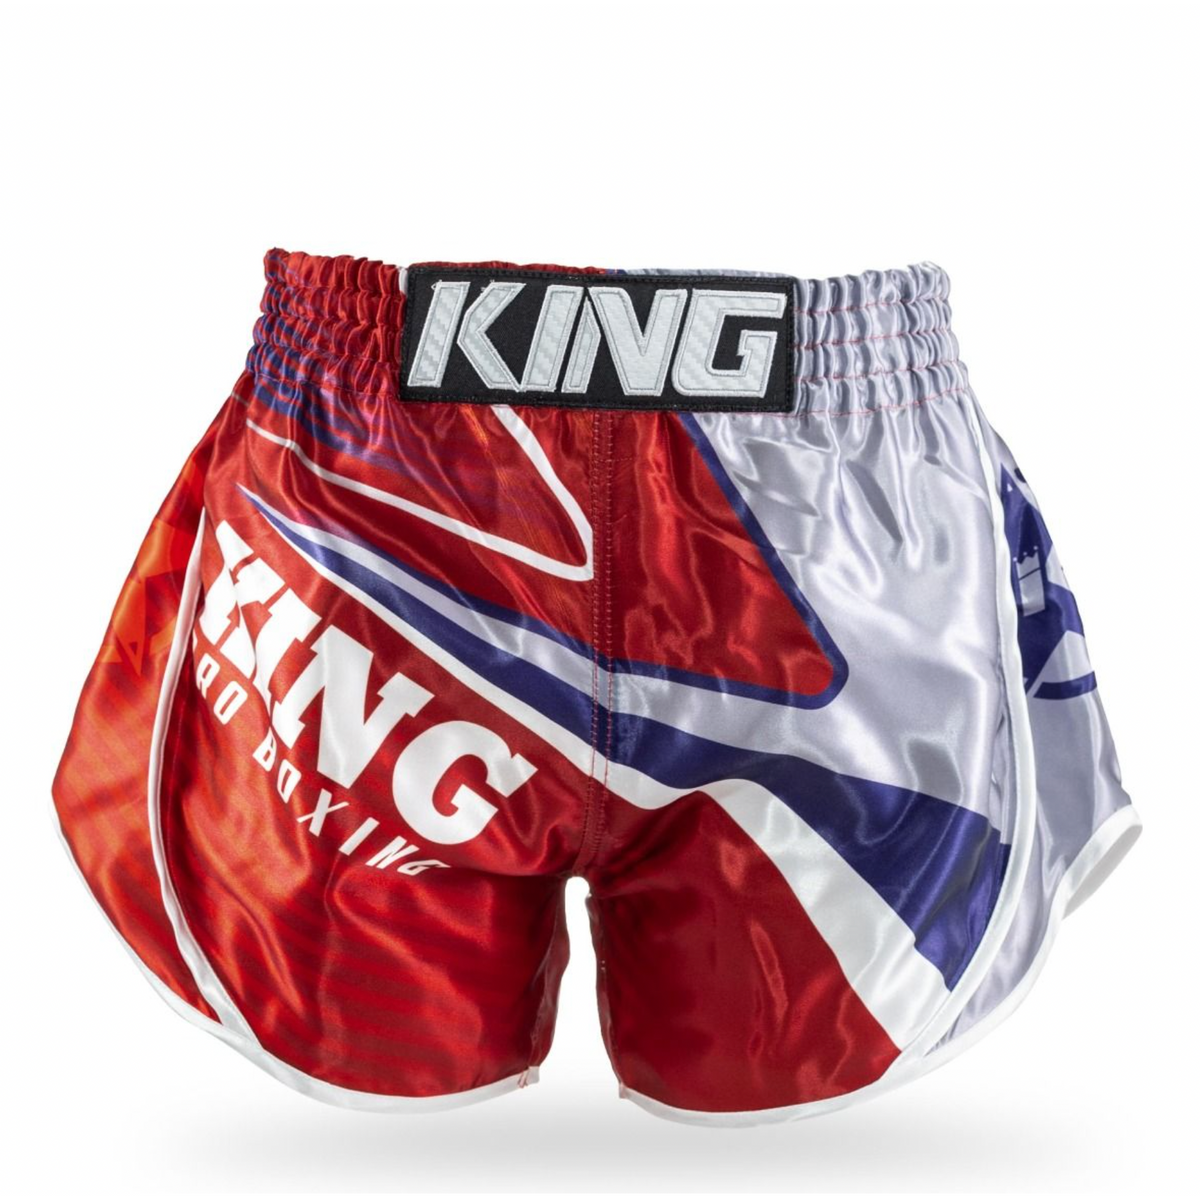 Striker 3 Muay Thai Shorts - King